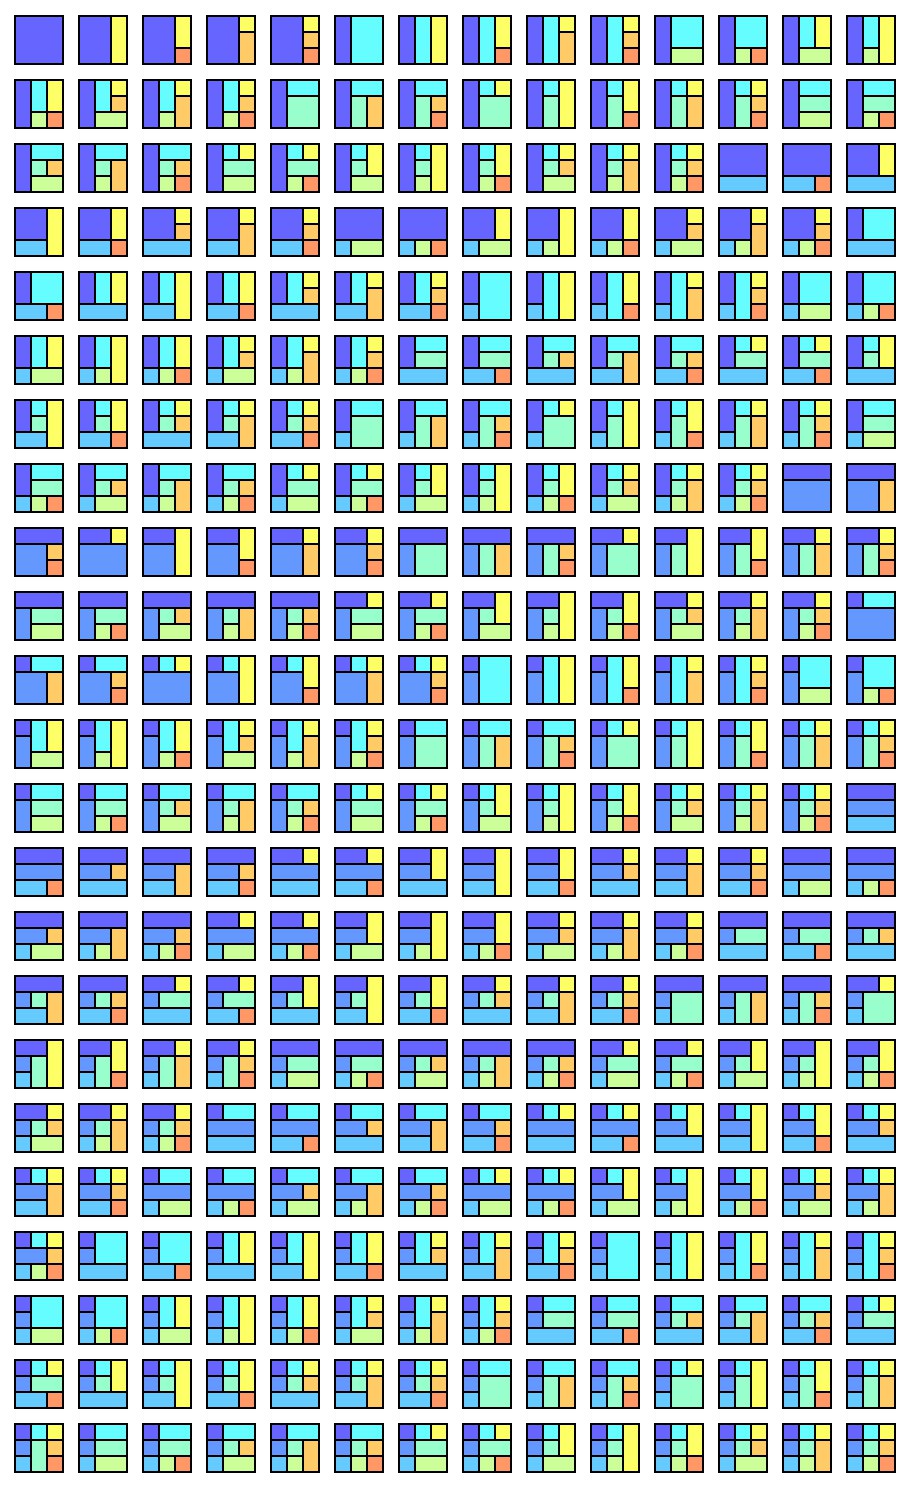 grid3x3-layouts.jpg